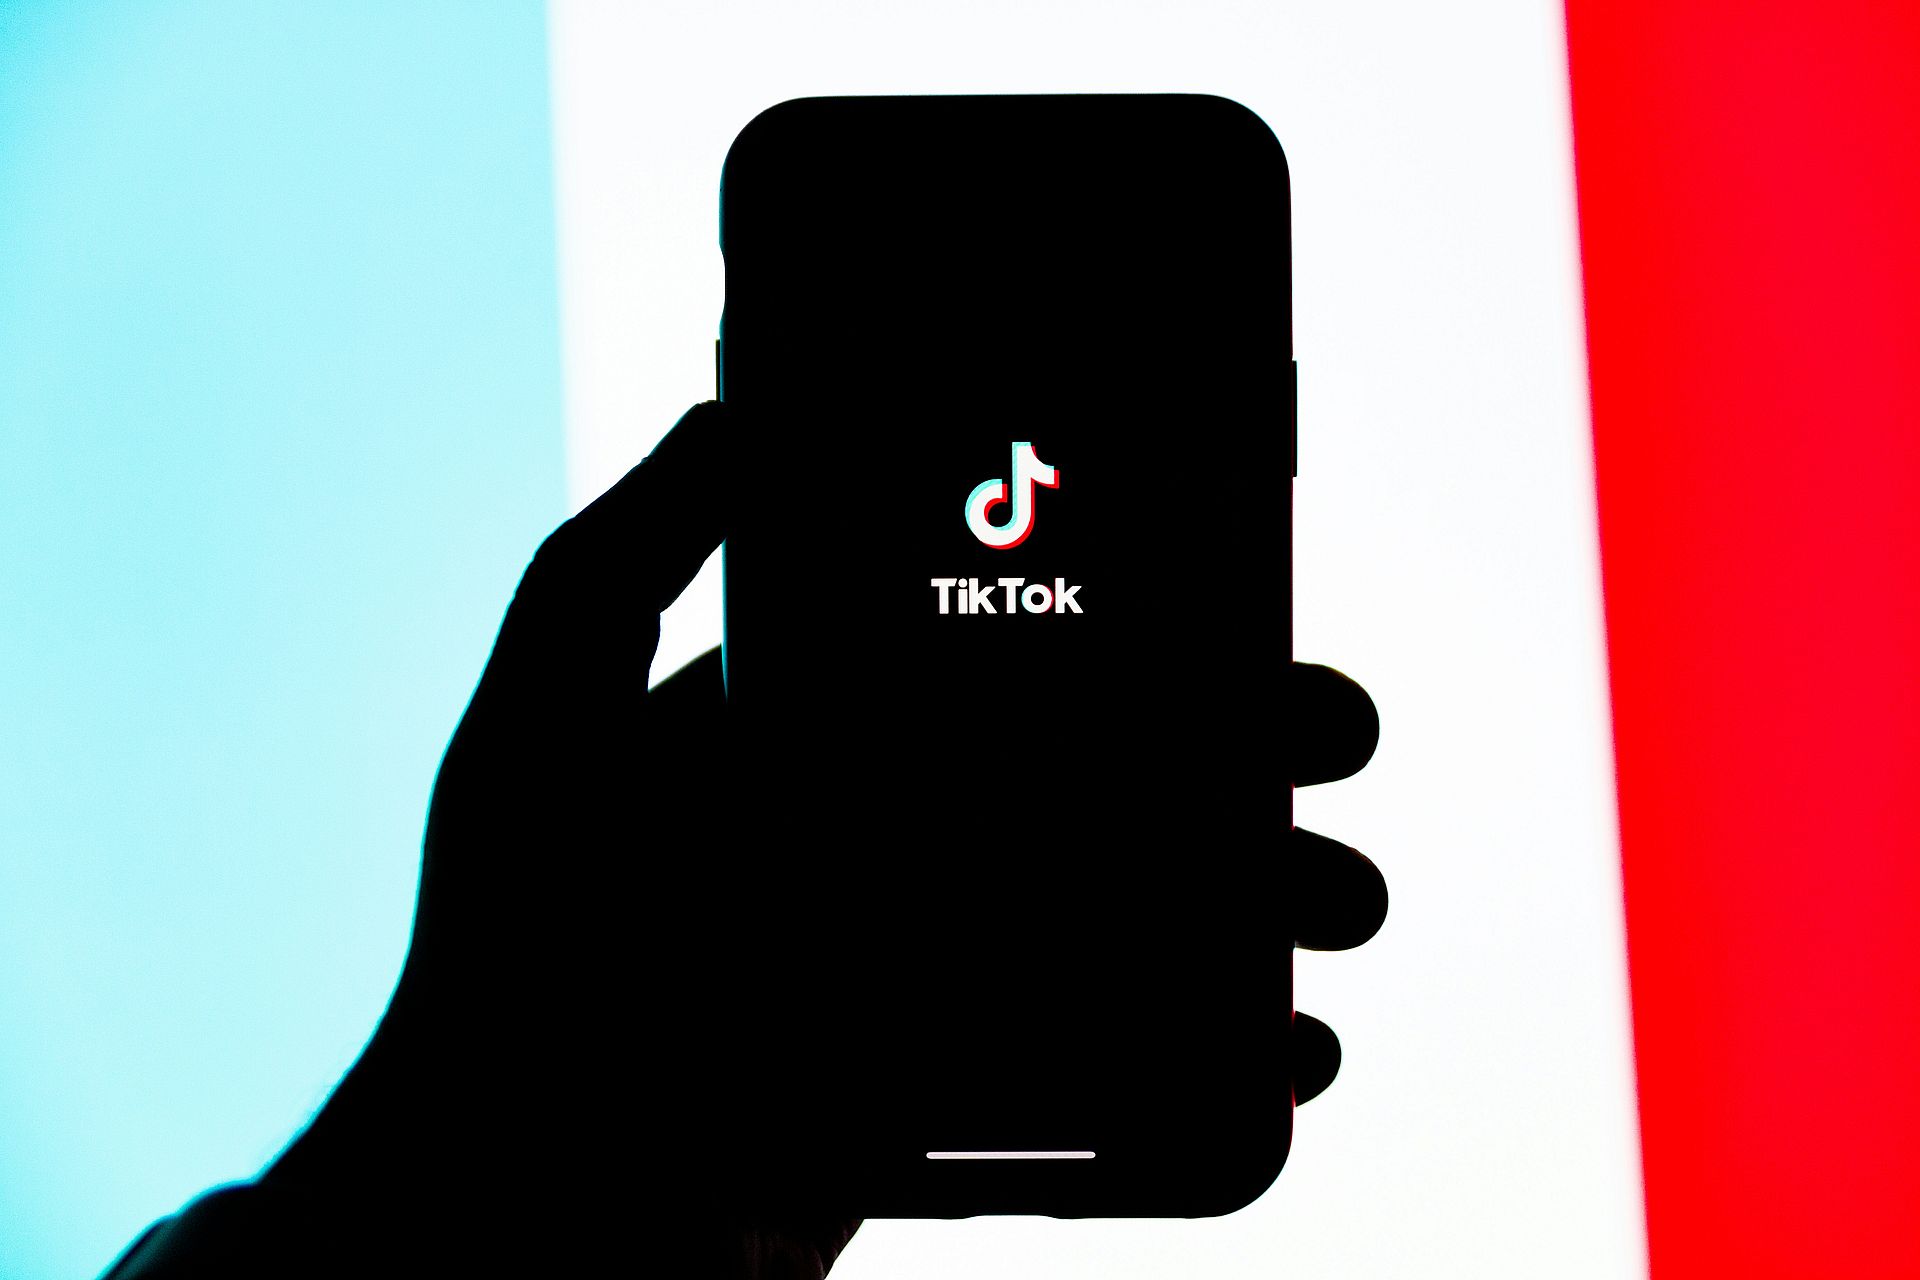 No more secrets: TikTok's full disclosure on influence groups